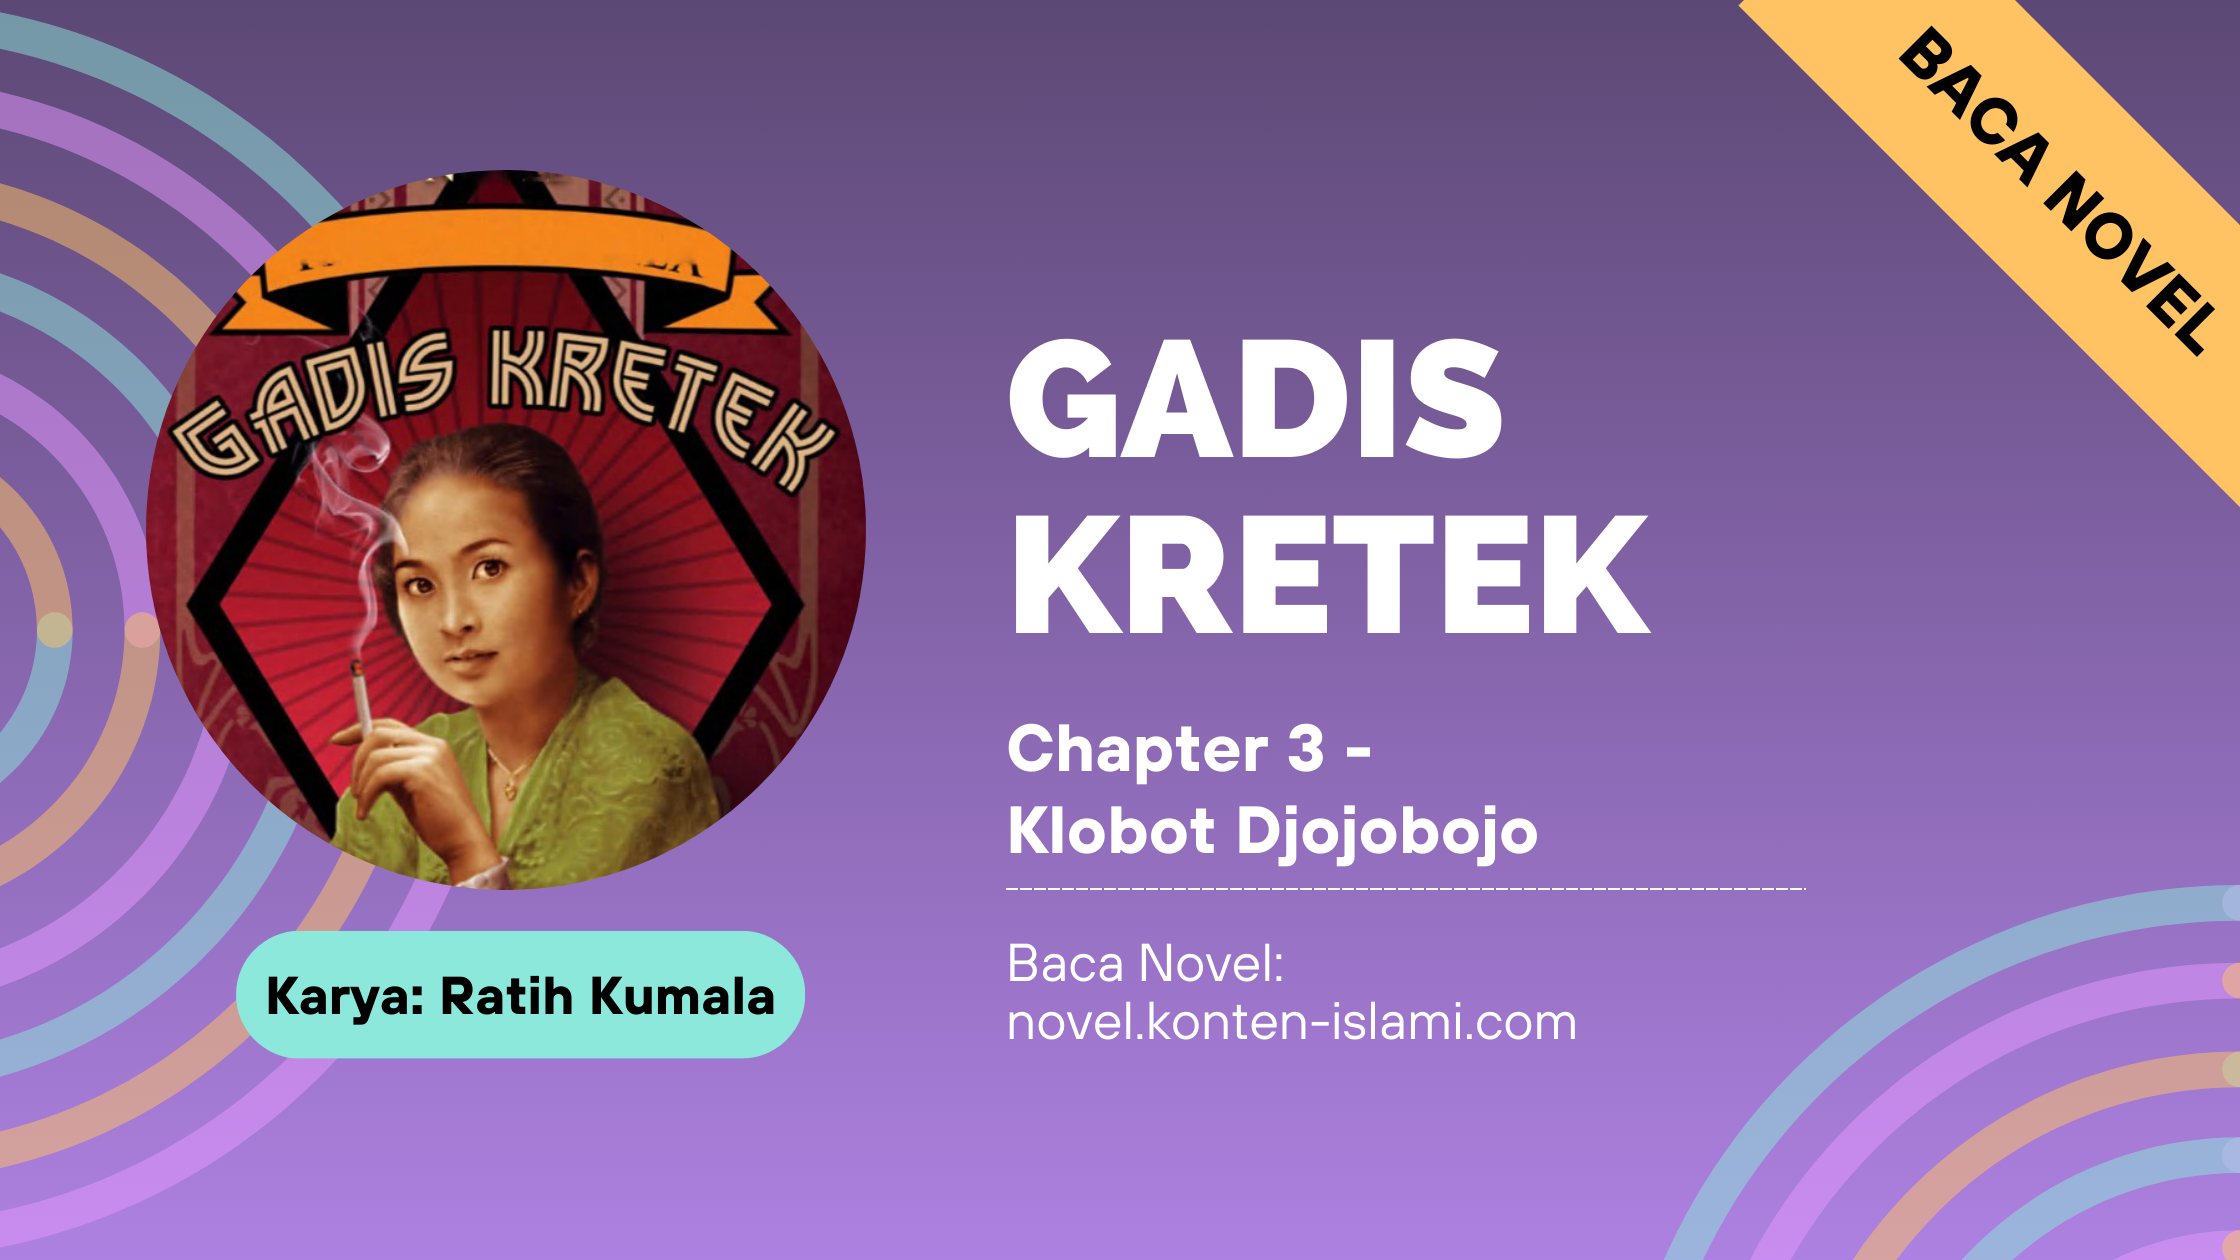 Gadis Kretek Chapter 3